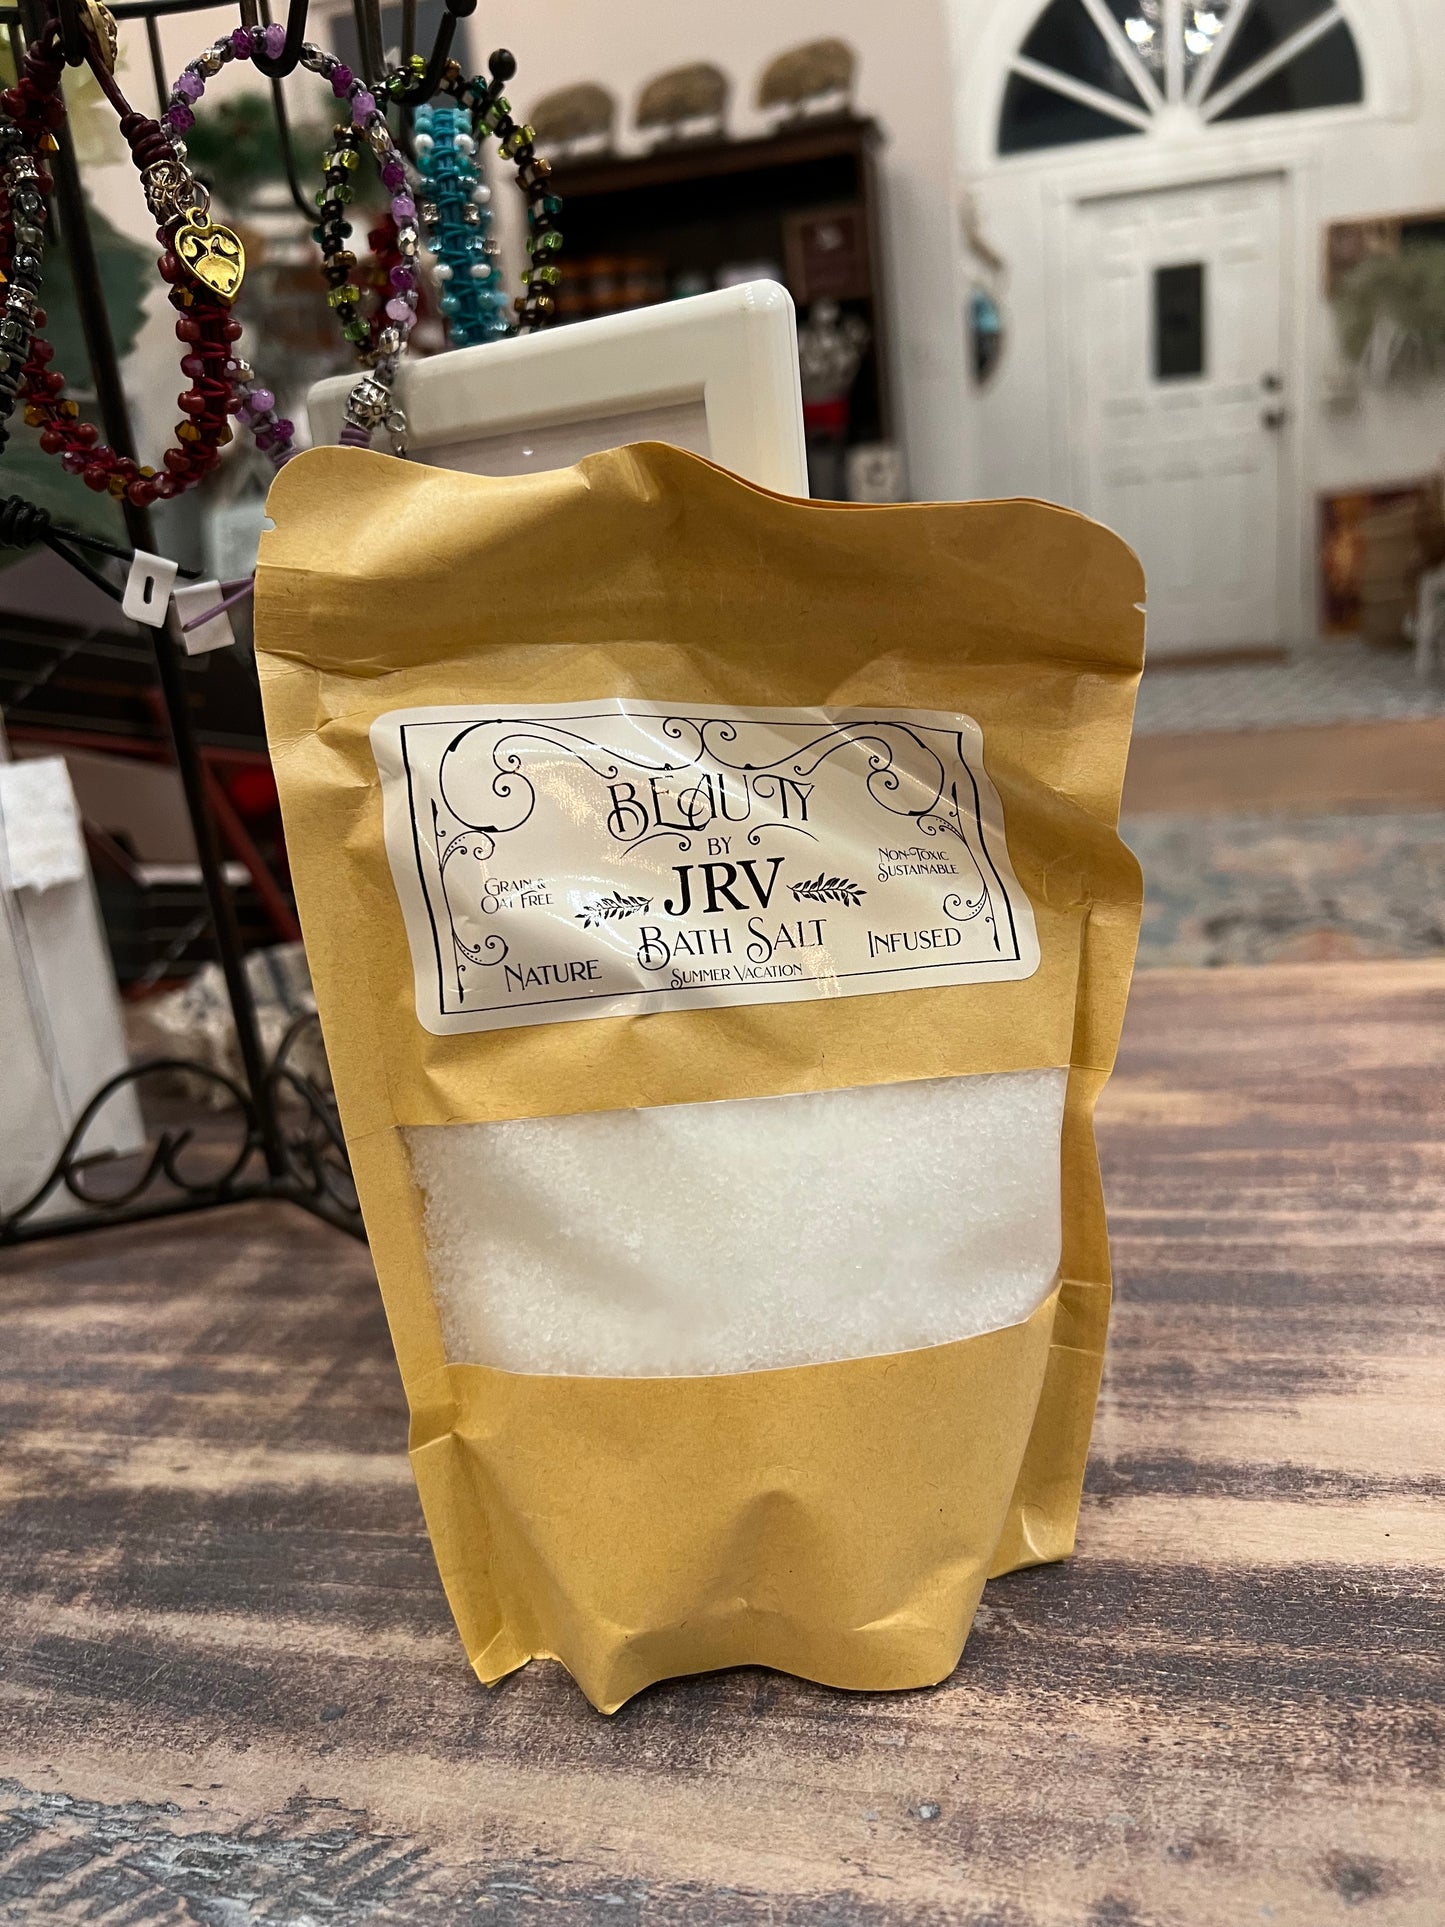 JRV Bath Salt Bags - Discontinued